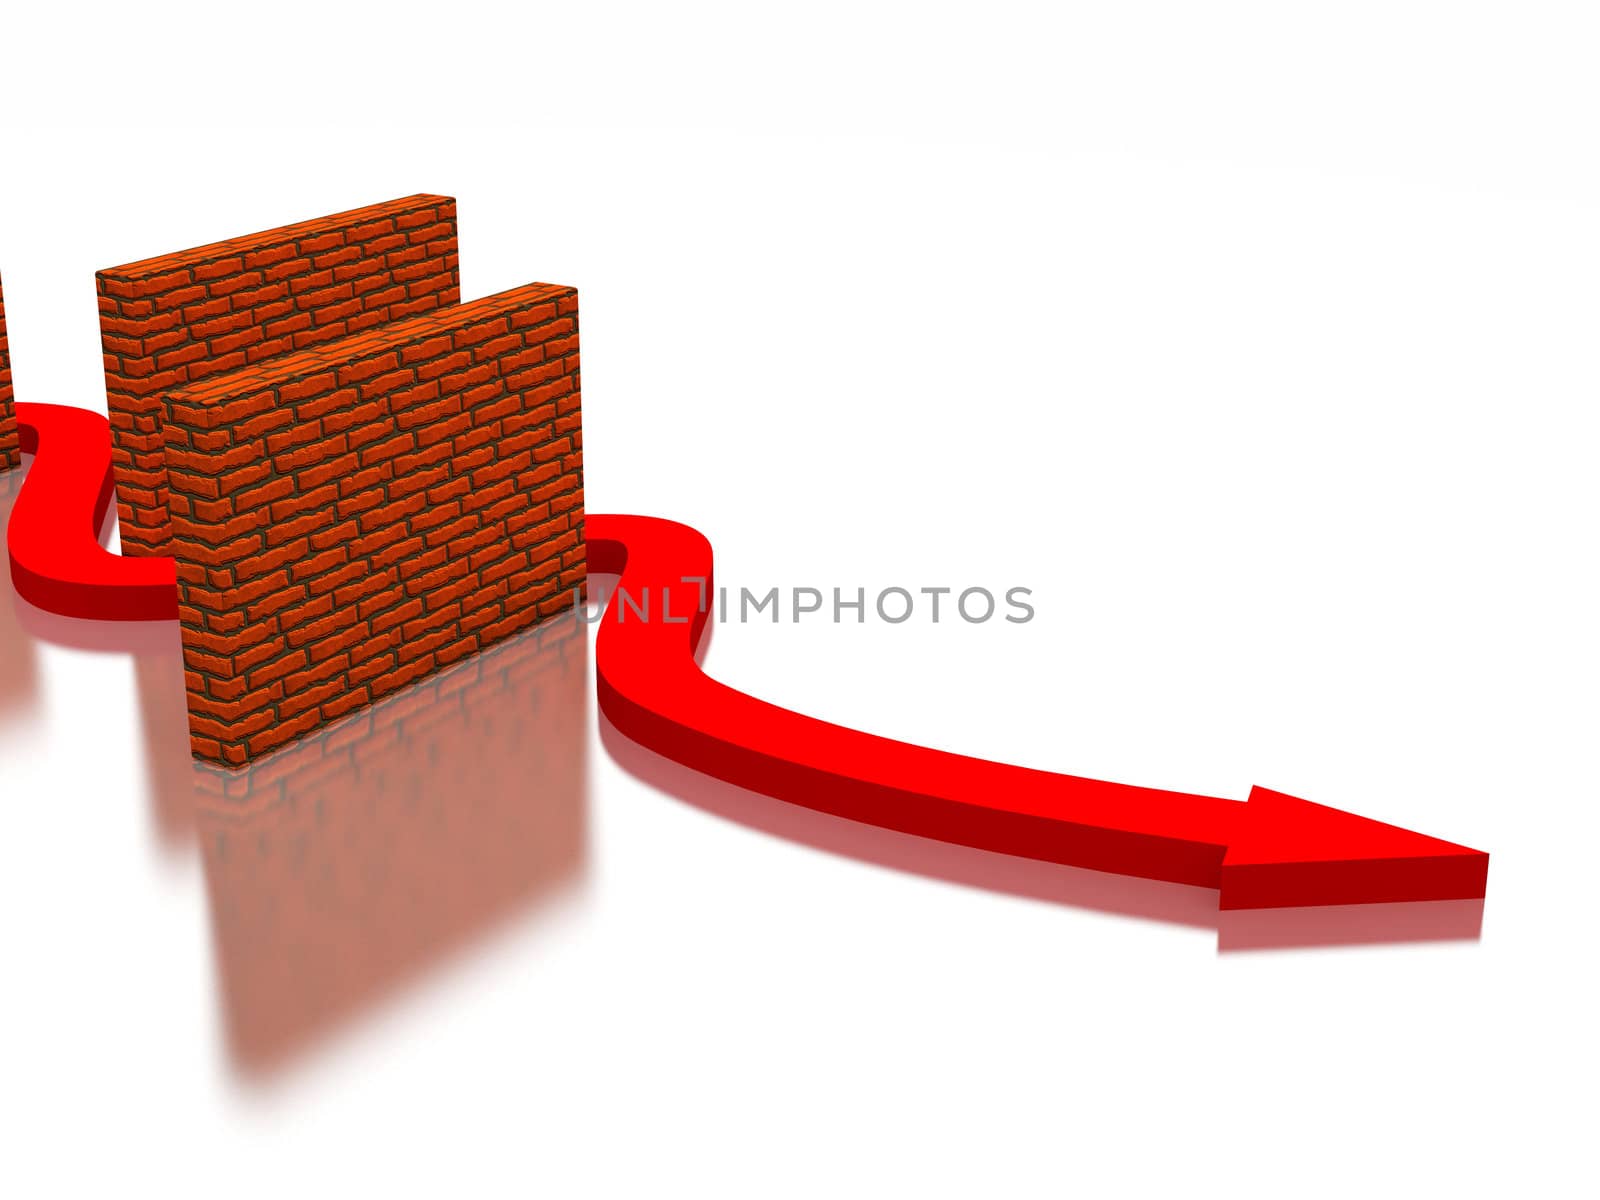 The red arrow near a brick wall